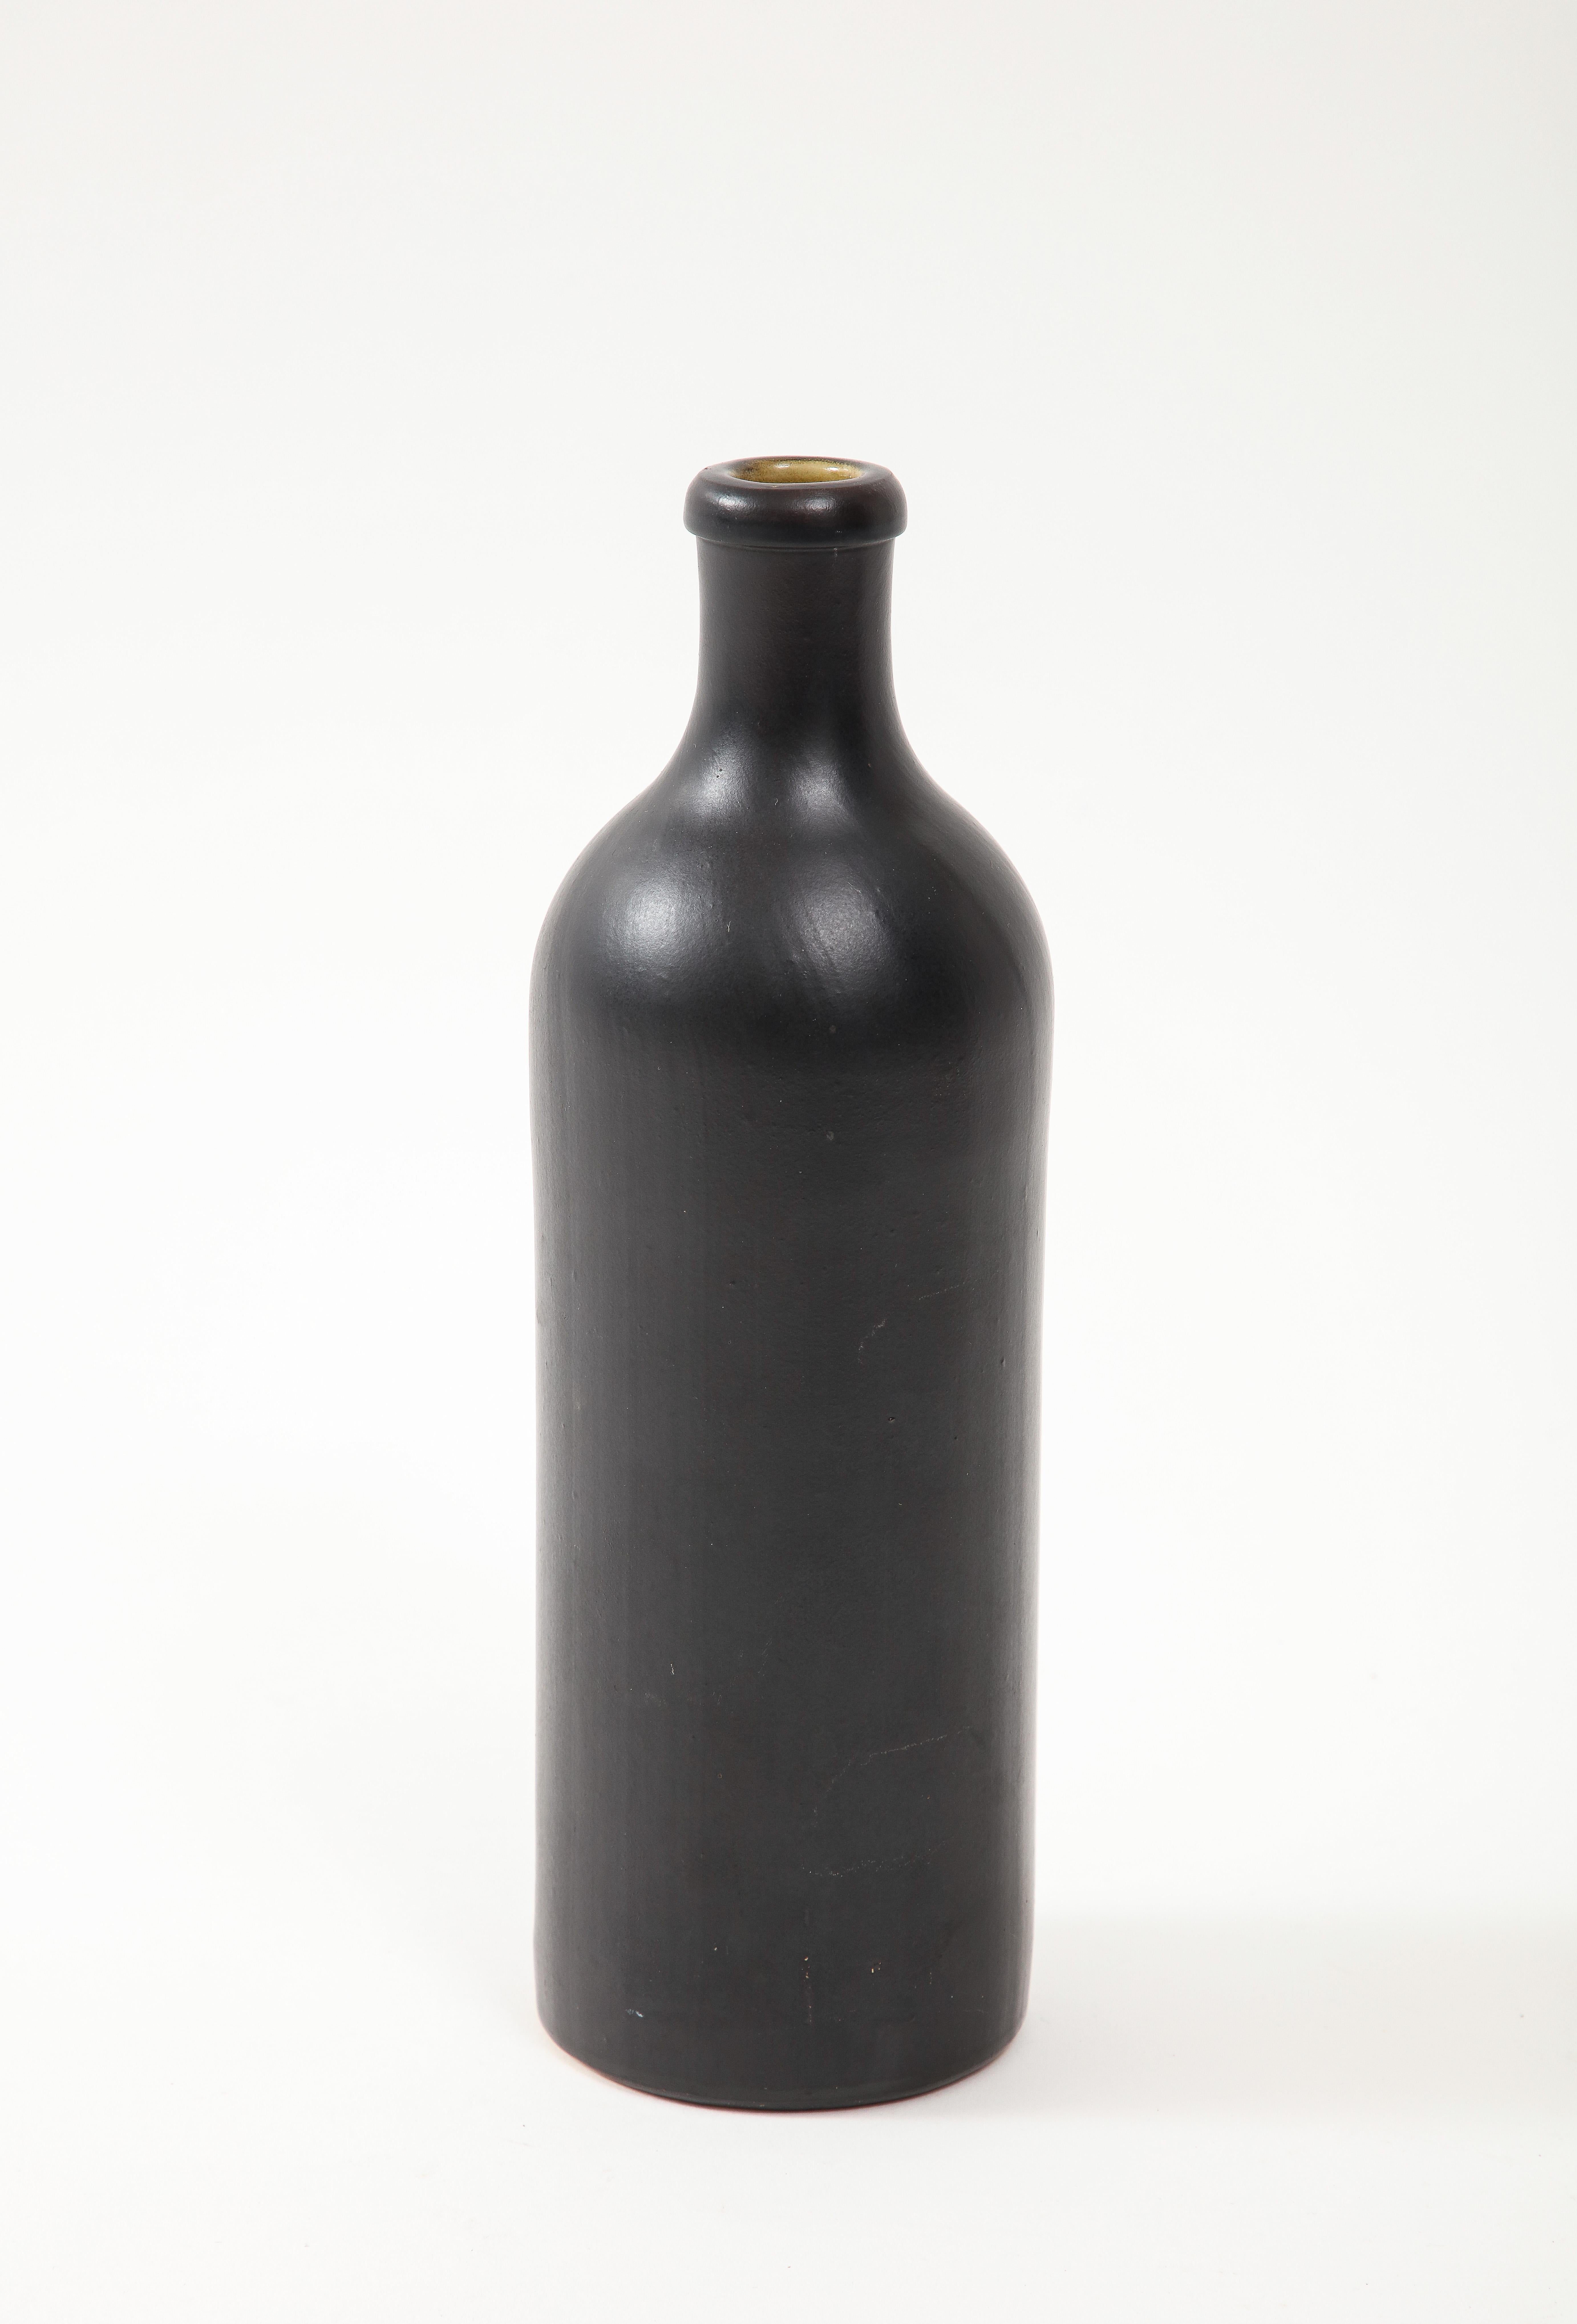 Ceramic Large Georges Jouve Style Period Black Matte Vase, France, c. 1950 For Sale